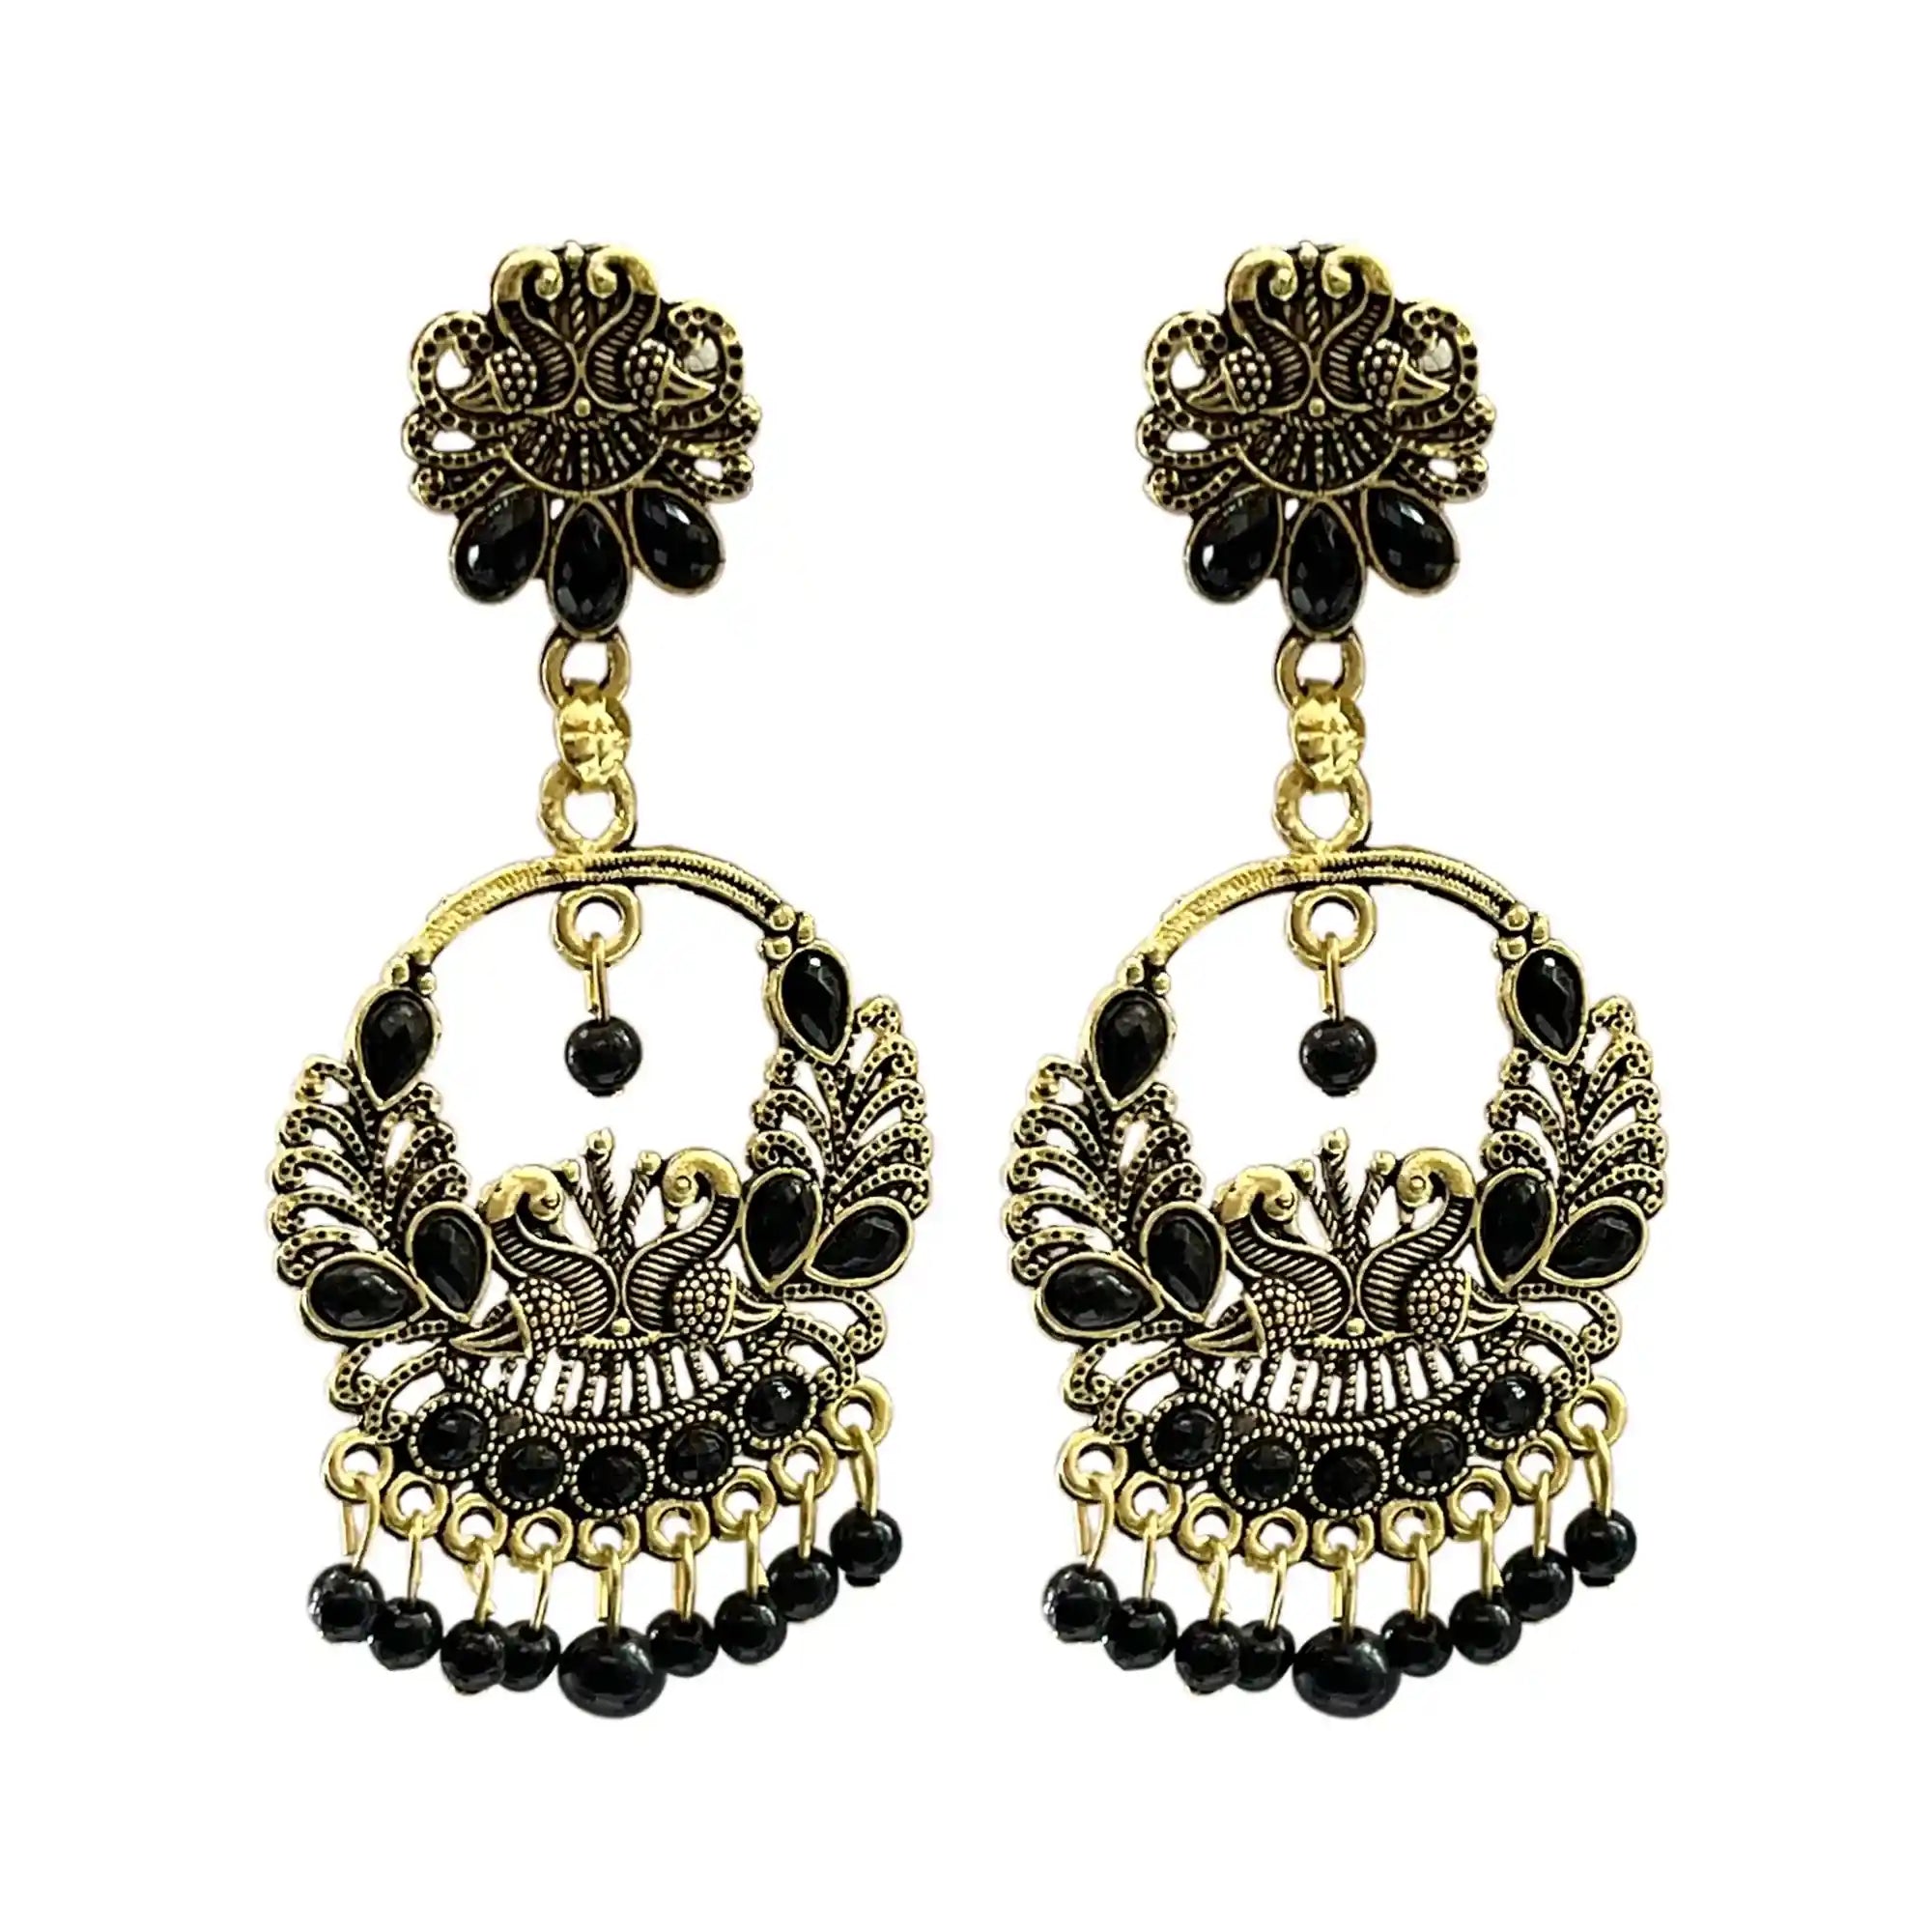 long chandbali earrings, bridesmaid earrings, peacock earrings, oxidised earrings